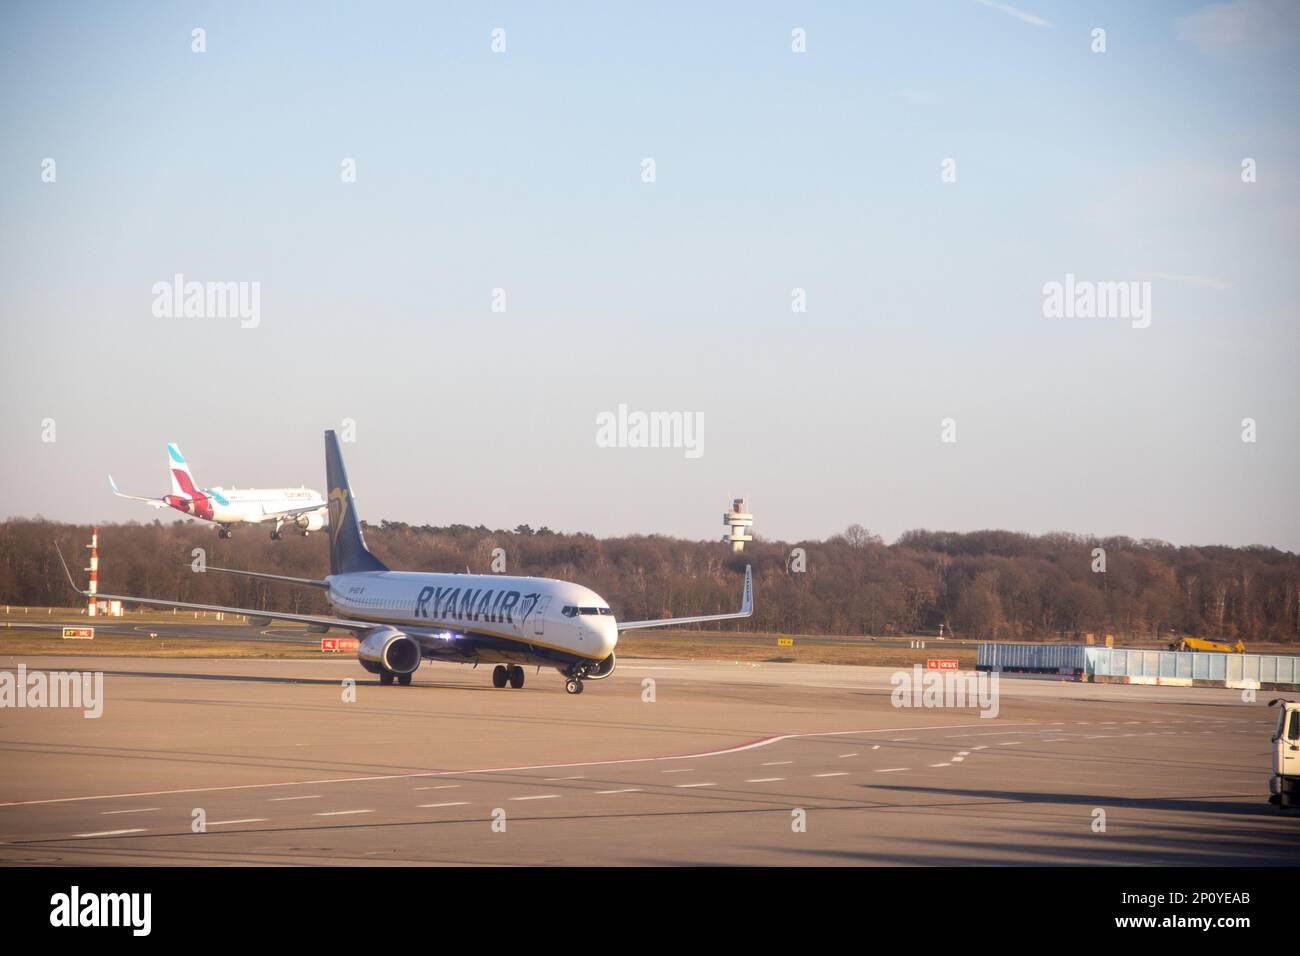 Ryan Air plane lnaded at Koln/Bonn Airport. Credit: Sinai Noor / Alamy Stock Photo Stock Photo